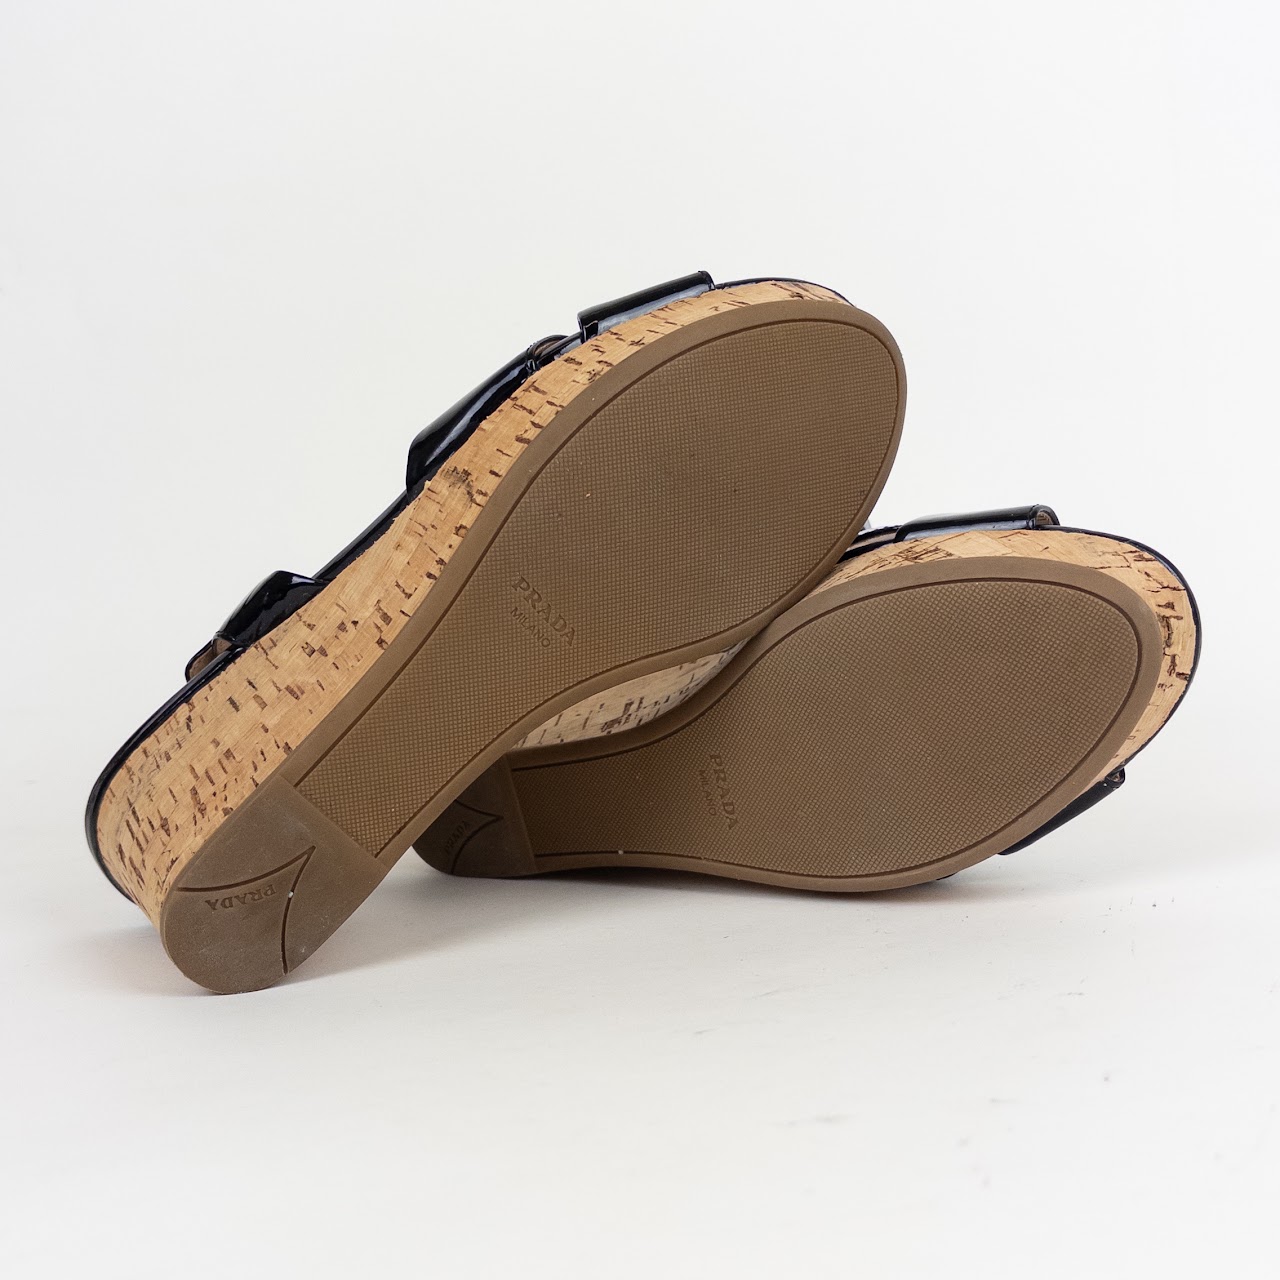 Prada Patent Leather Slingback Sandals